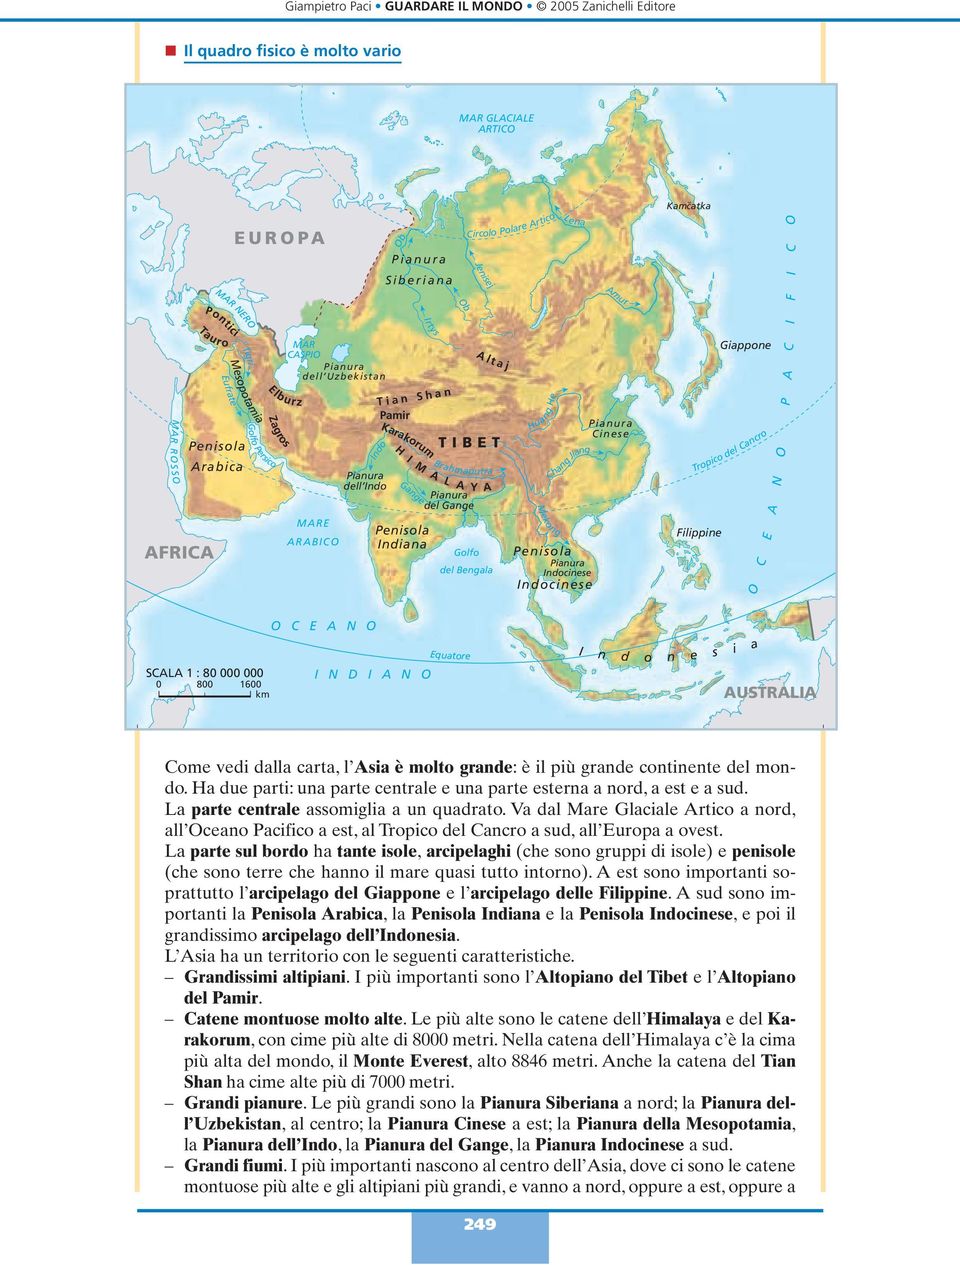 Bengala Circolo Polare rtico j Huang He Mekong Chang Jiang Lena Indocinese Indocinese mur Cinese Kam catka Filippine Giappone Tropico del Cancro O C E N O P C I F I C SCL 1 : 80 000 000 0 800 1600 km